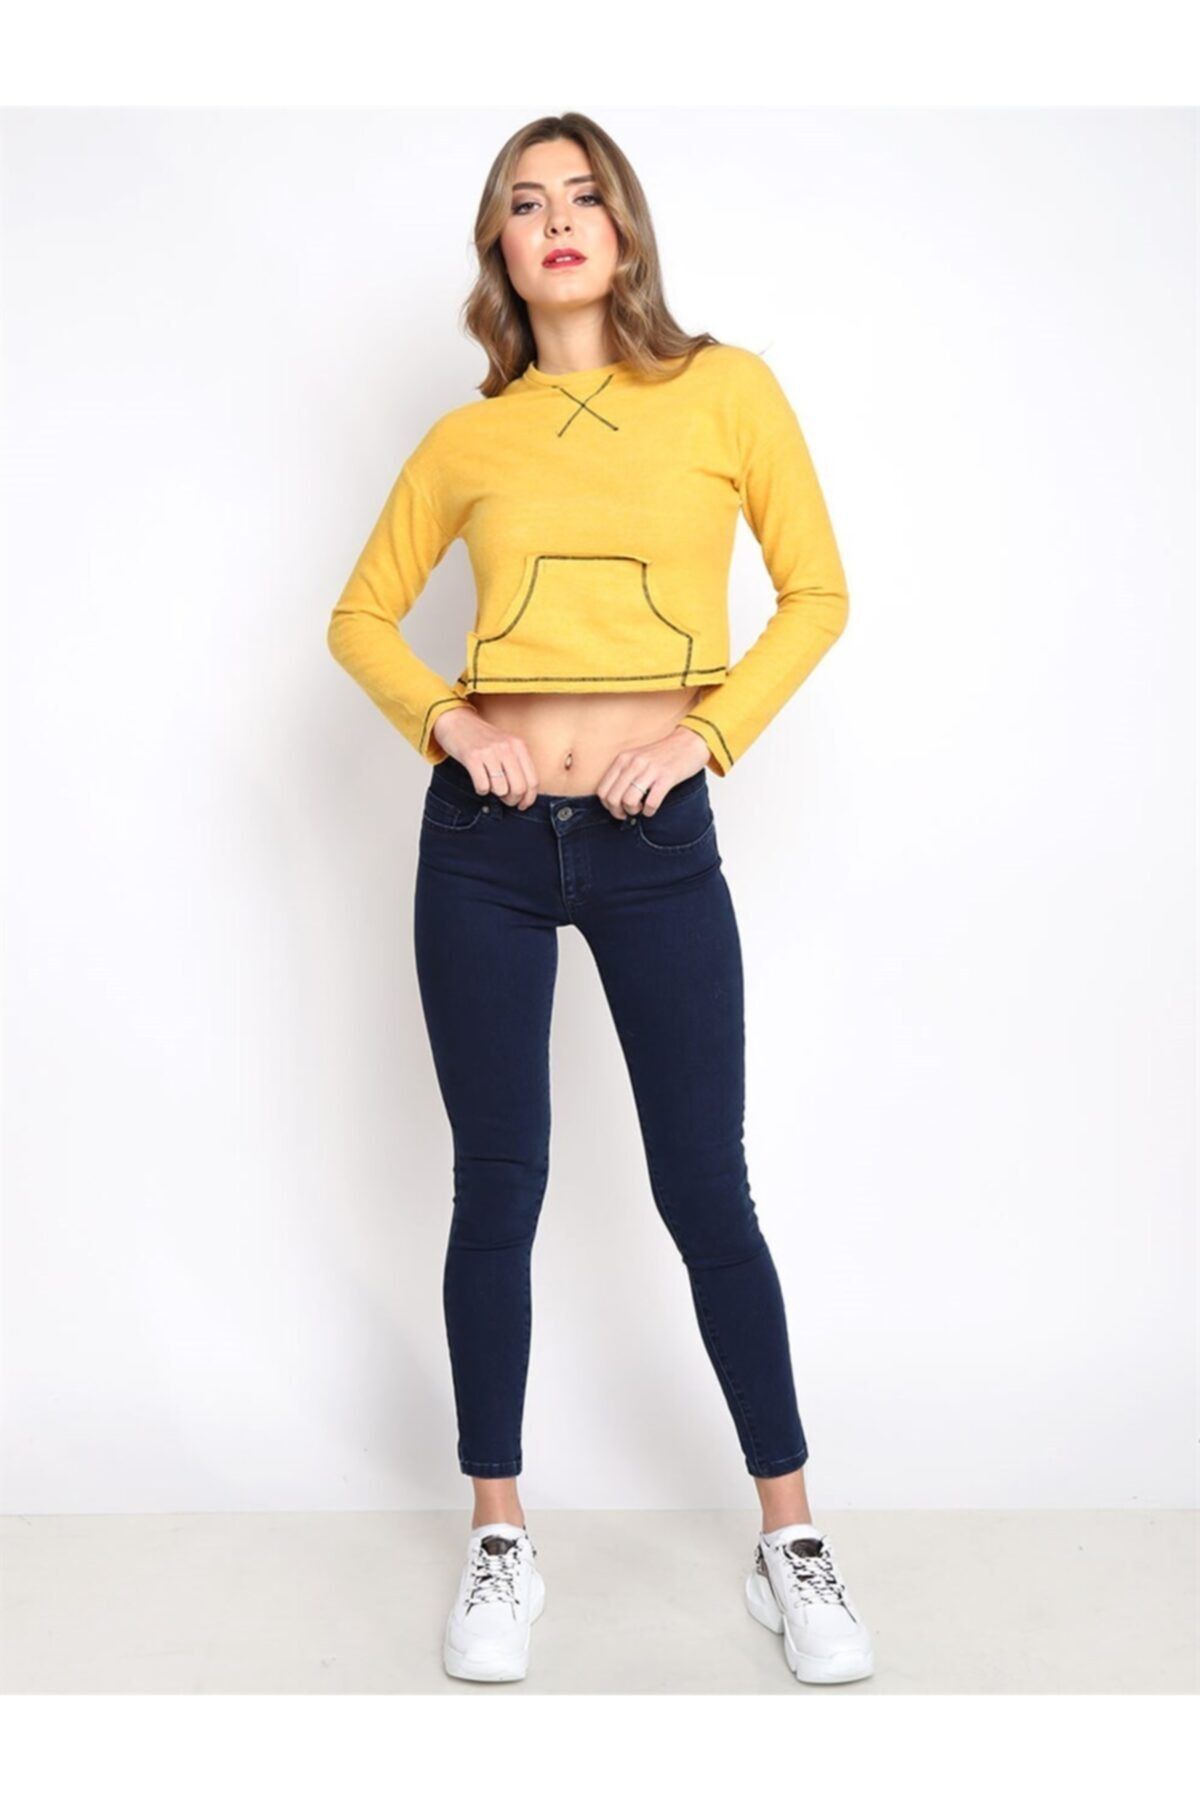 Twister Jeans Kadın Slim Fit Orta Bel Pantolon Lima 9046-36 36